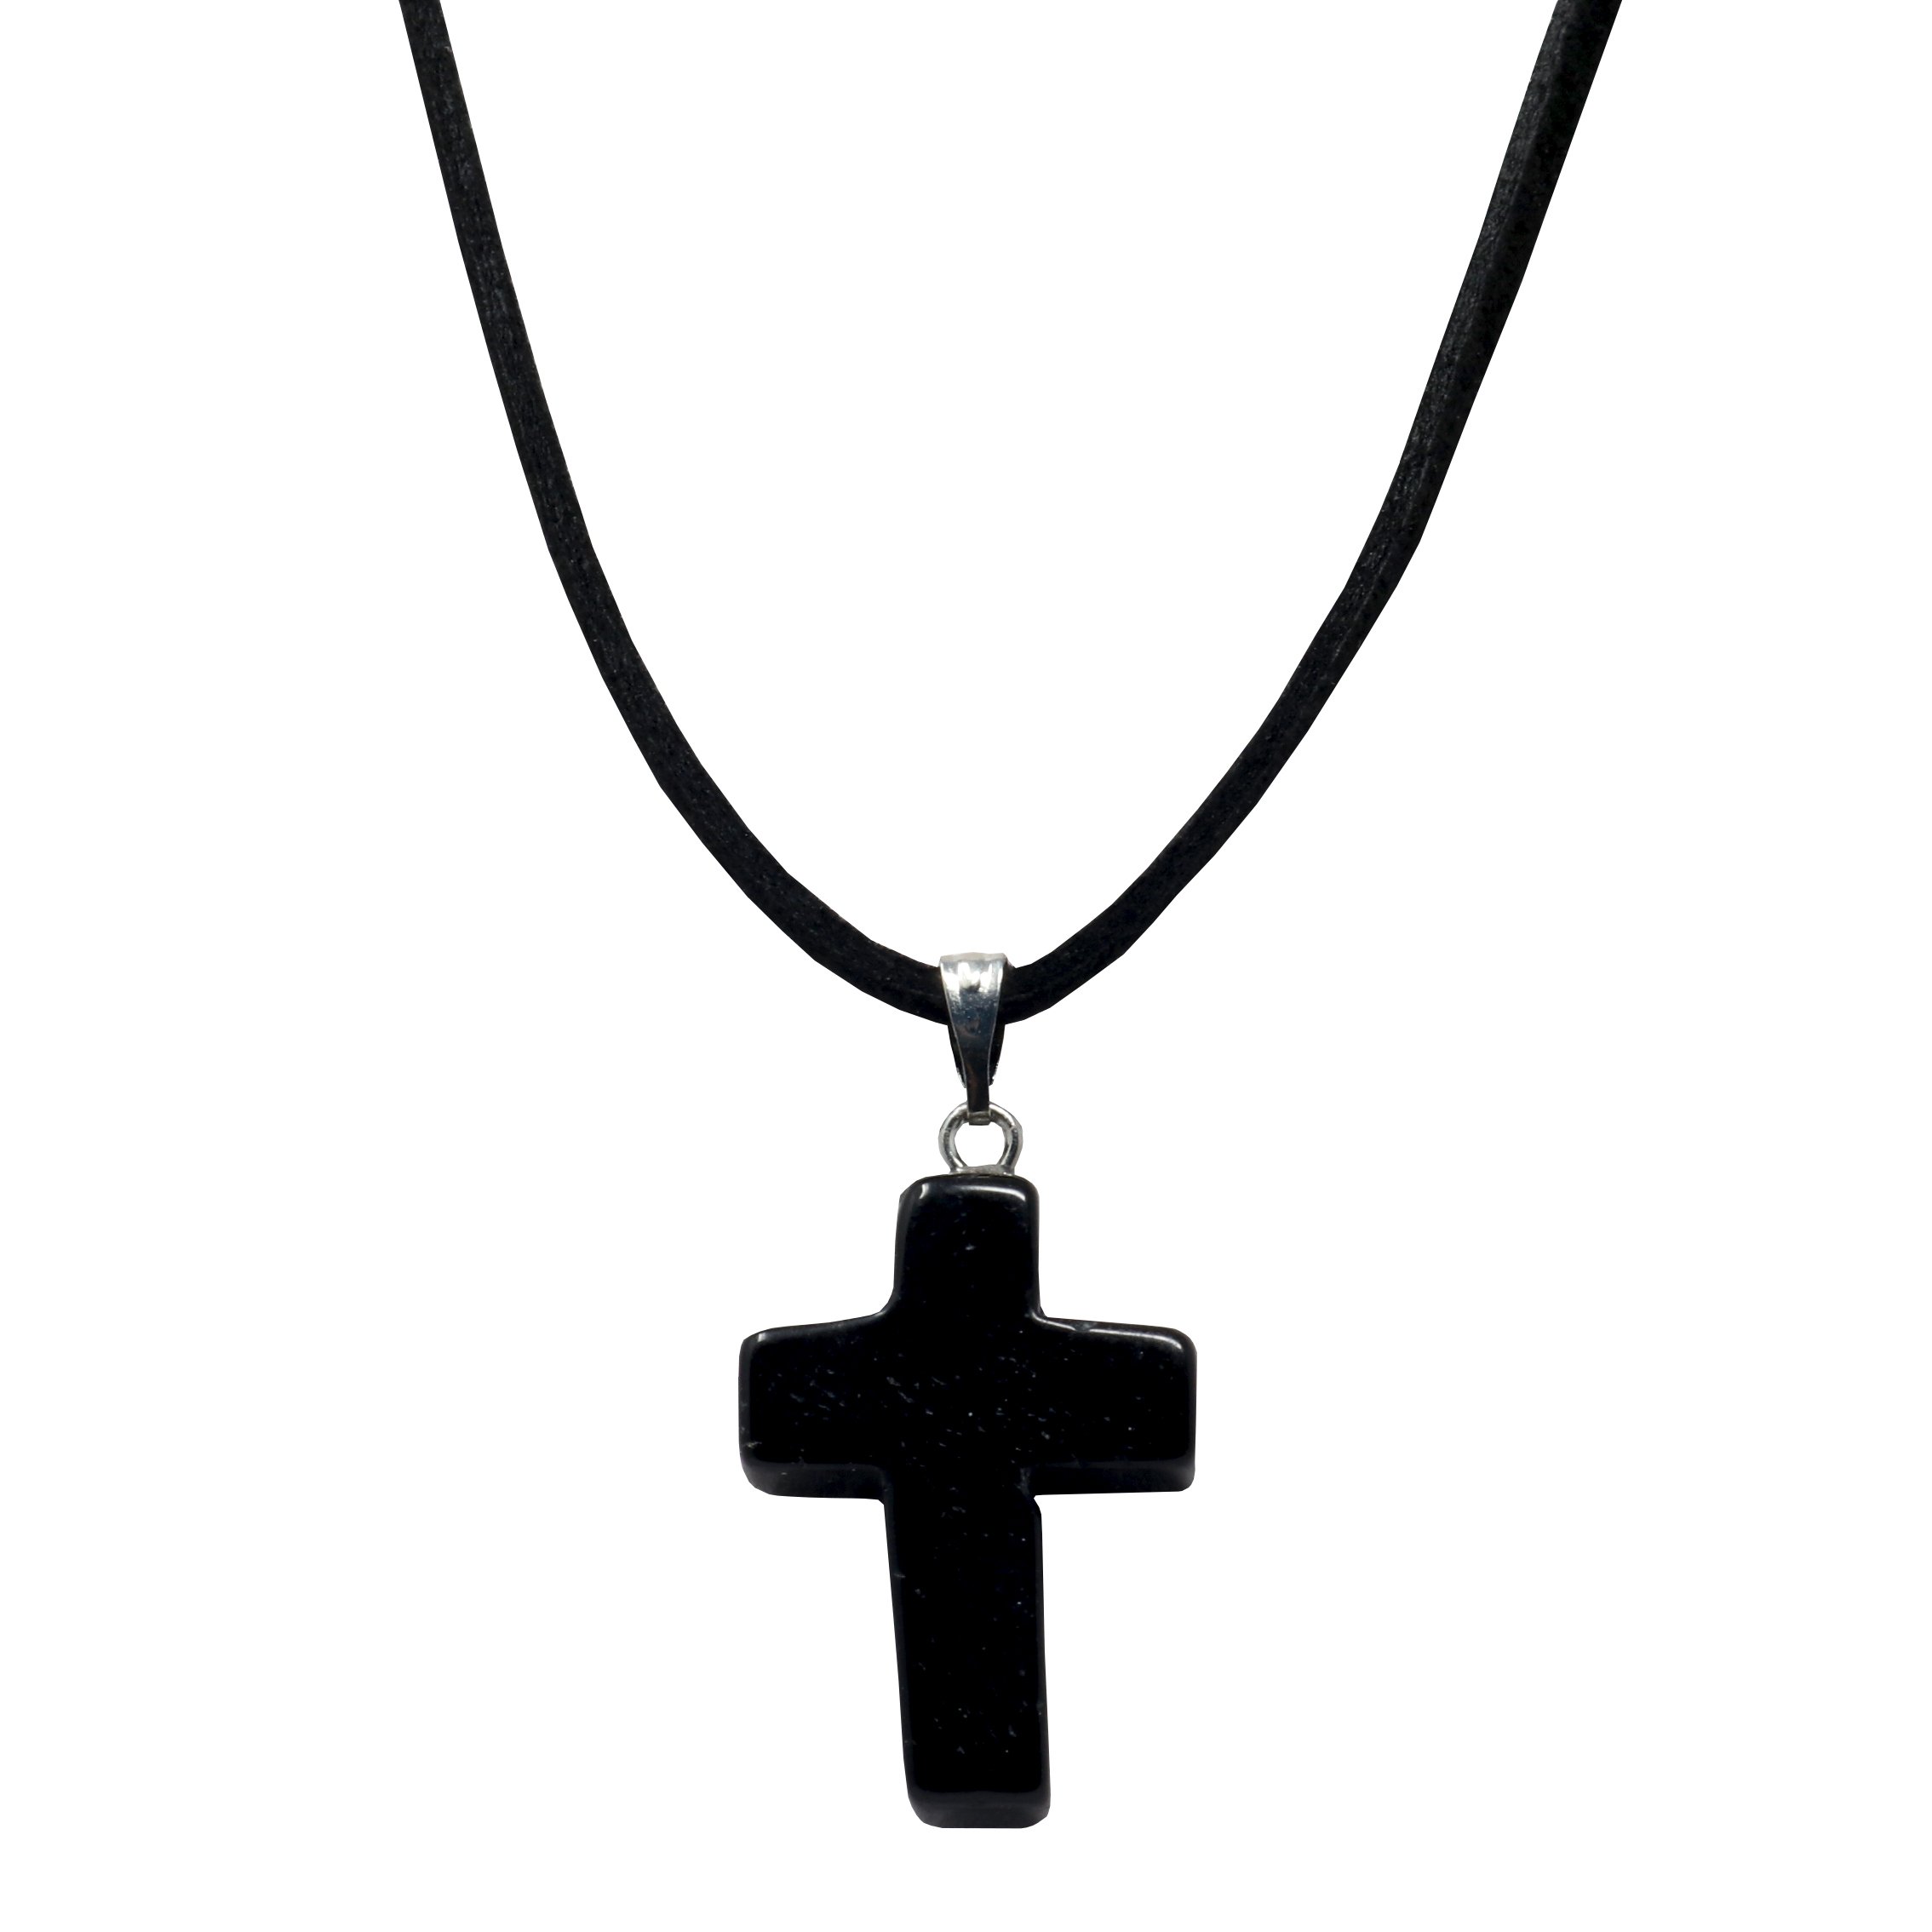 BRANDY MELVILLE GOLD Tone Crucifix Pendant Necklace Rope Chain Cross  Necklace £4.49 - PicClick UK